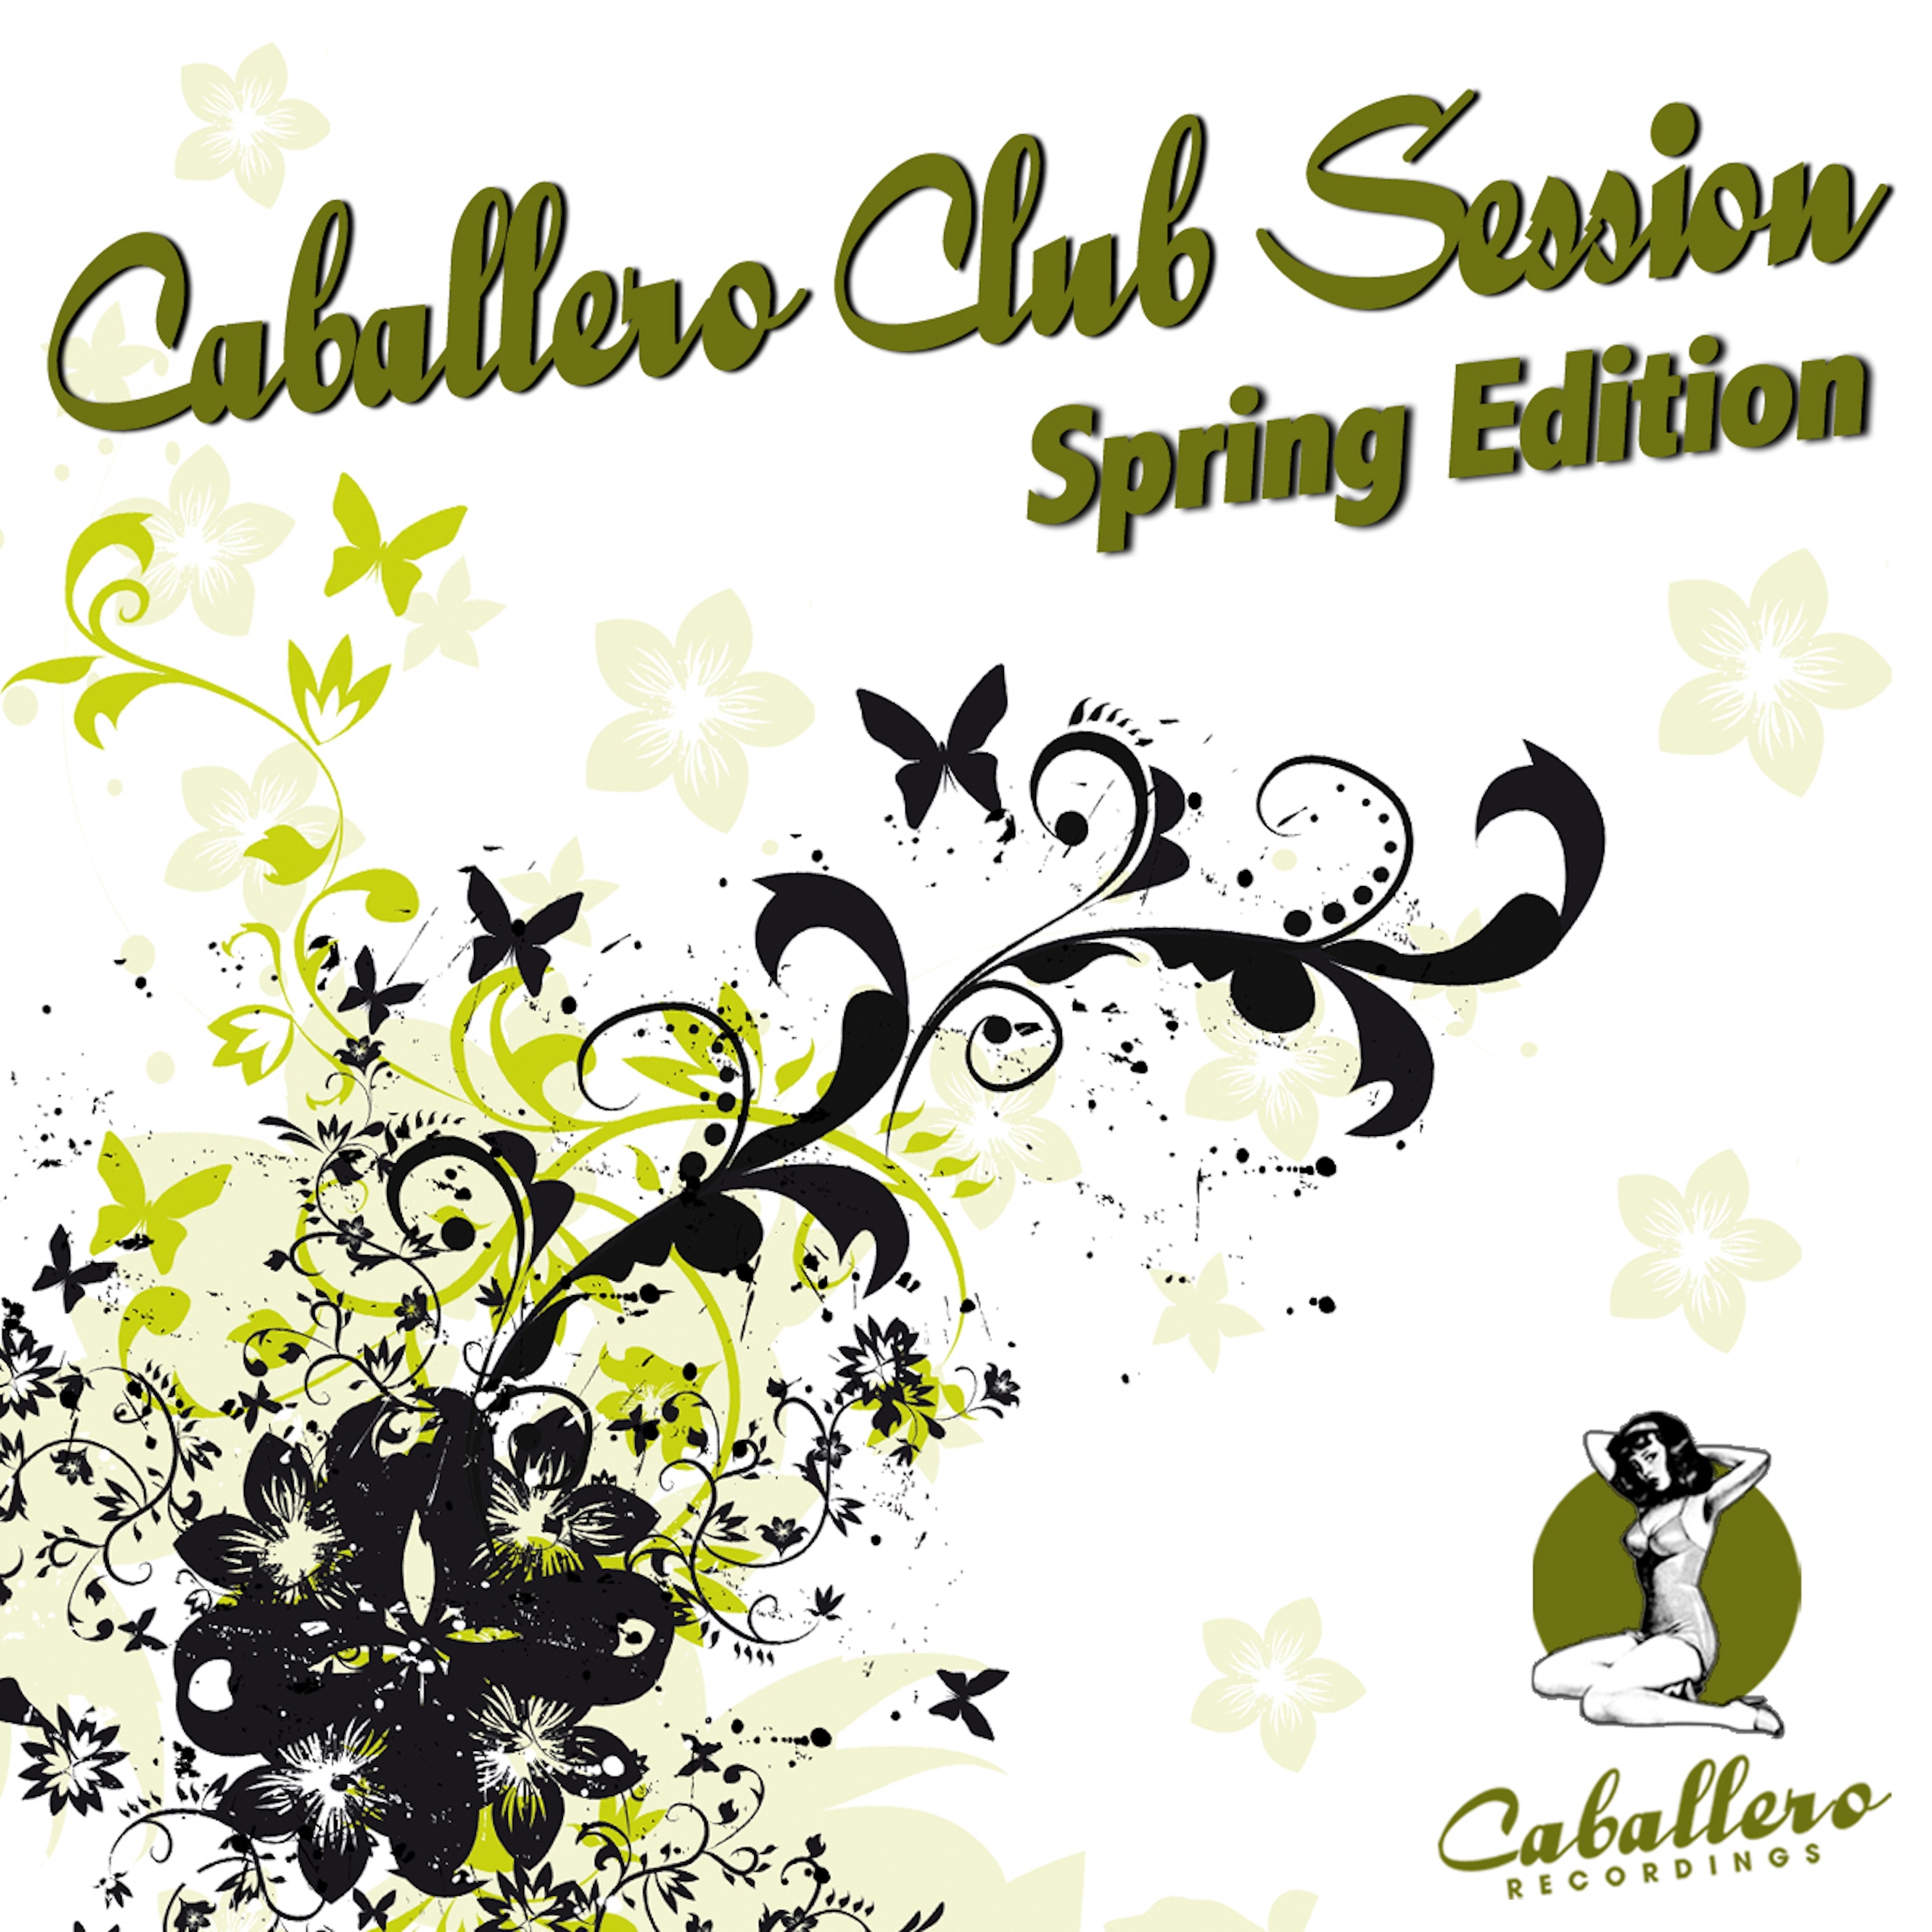 Caballero Club Session - Spring Edition